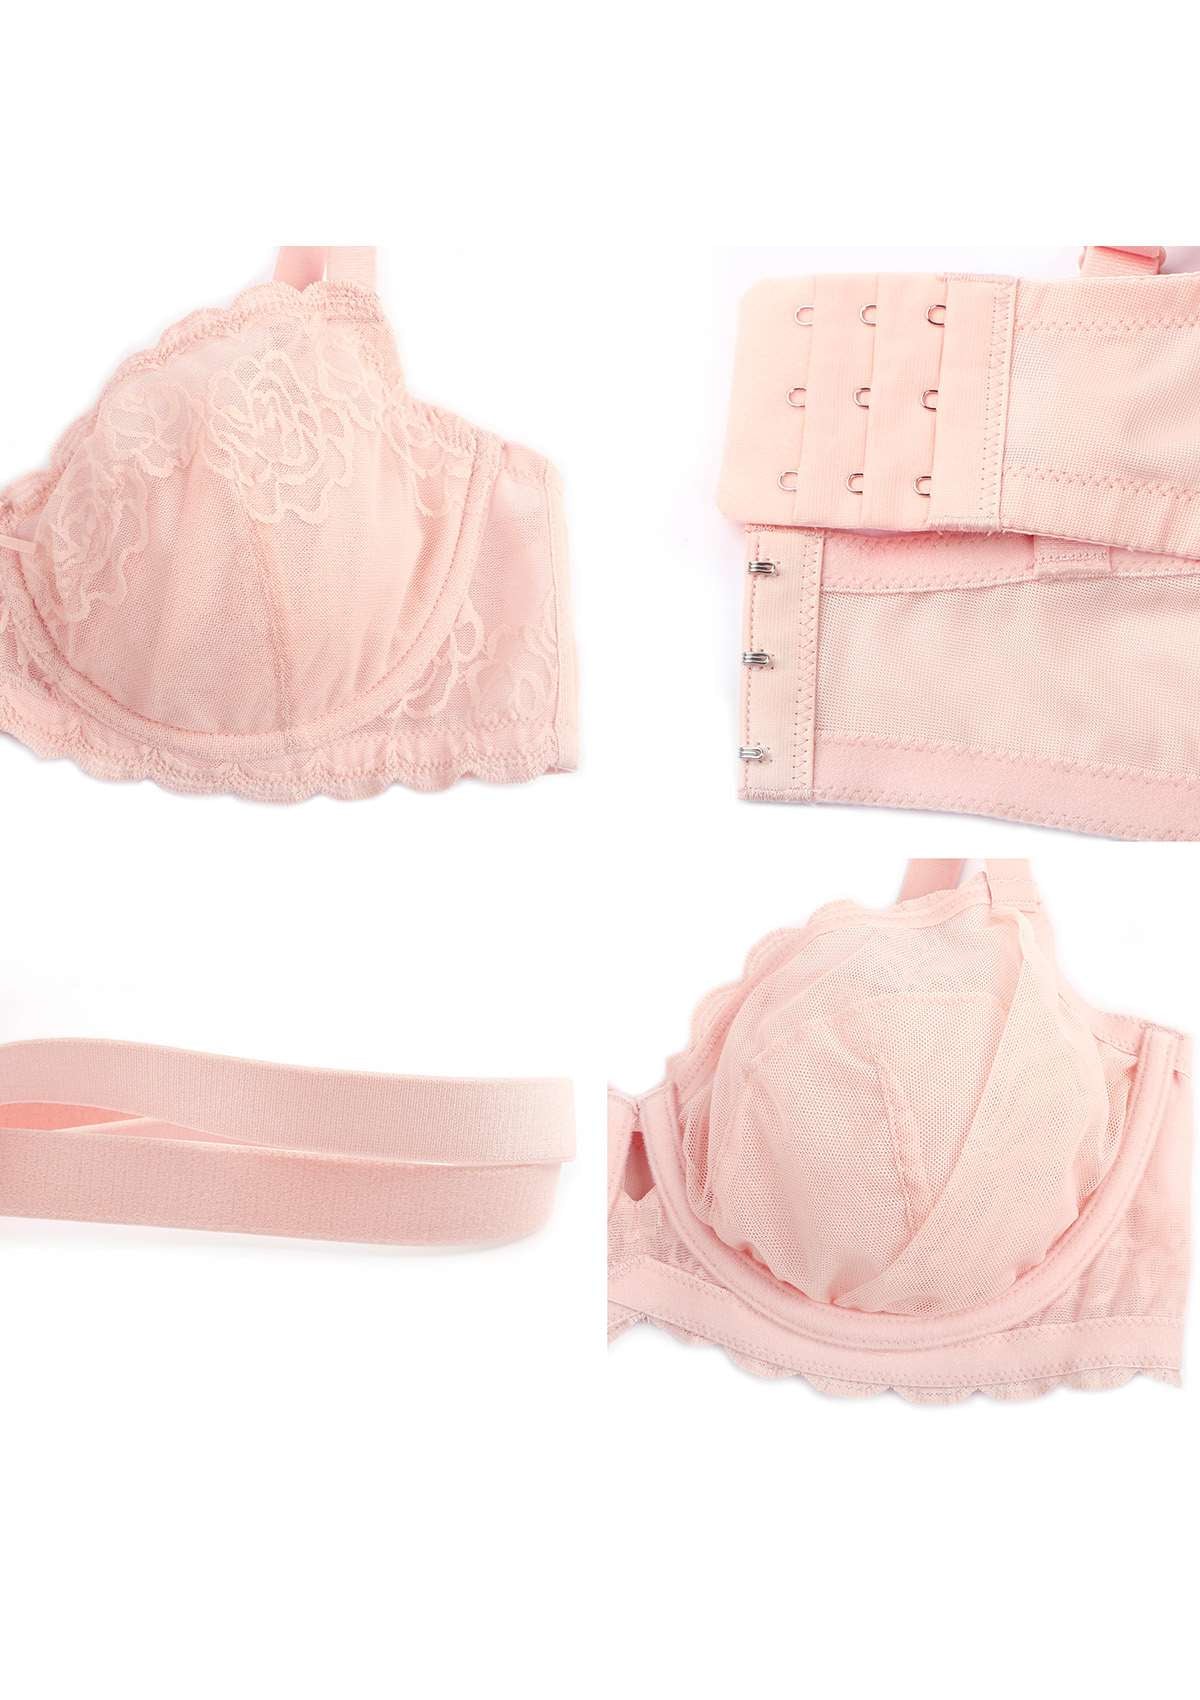 HSIA Rosa Bonica Sheer Lace Mesh Unlined Thin Comfy Woman Bra - Pink / 38 / DD/E